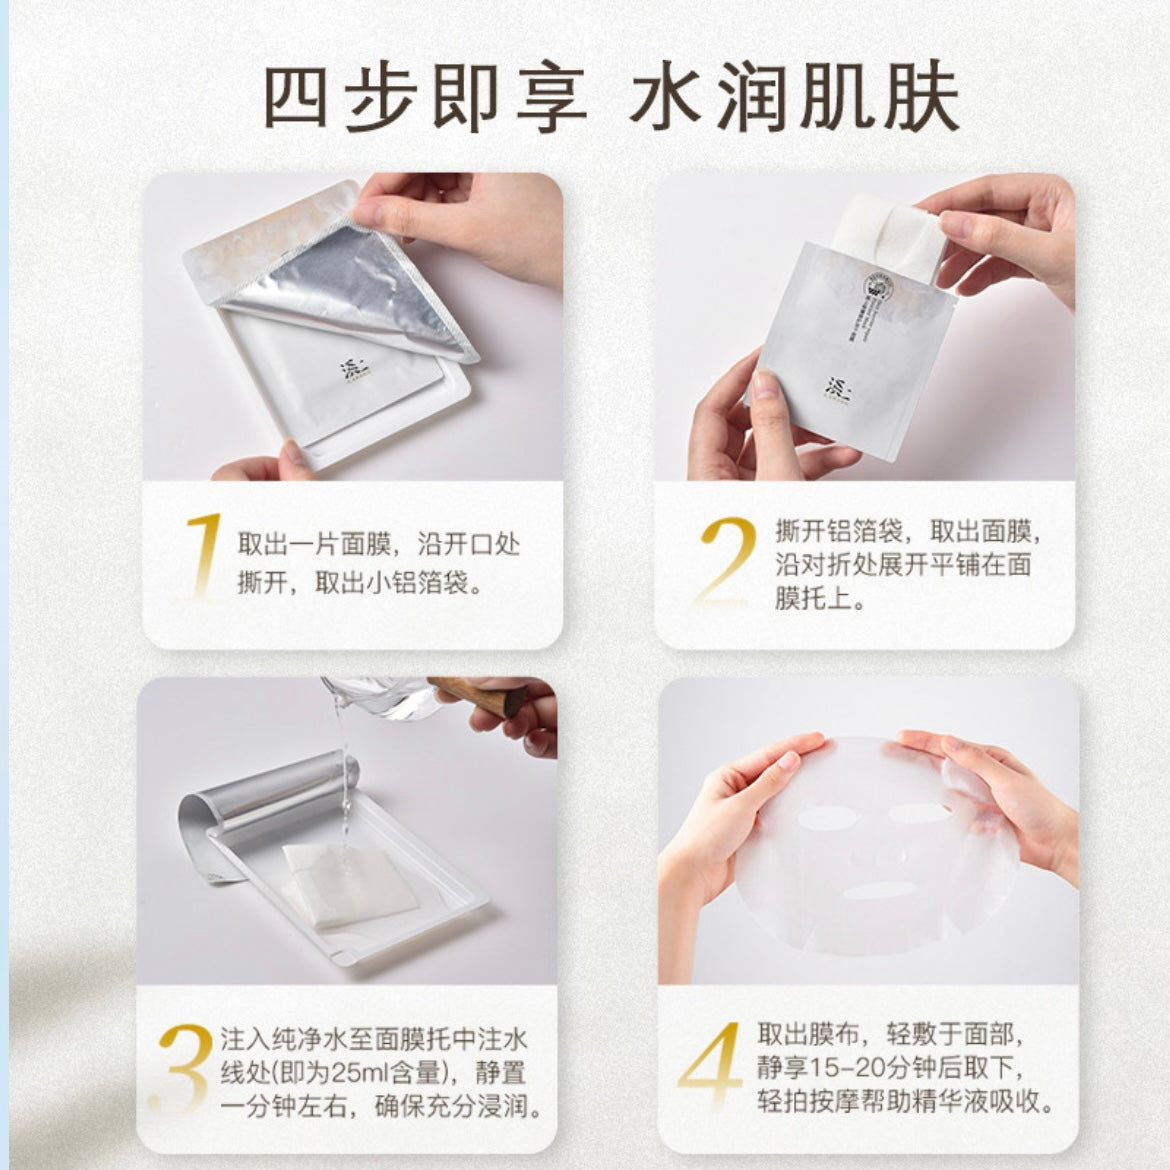 X.SHANG Repair Freeze Dried Mask 5pcs/box【范冰冰推荐】溪上修护冻干面膜